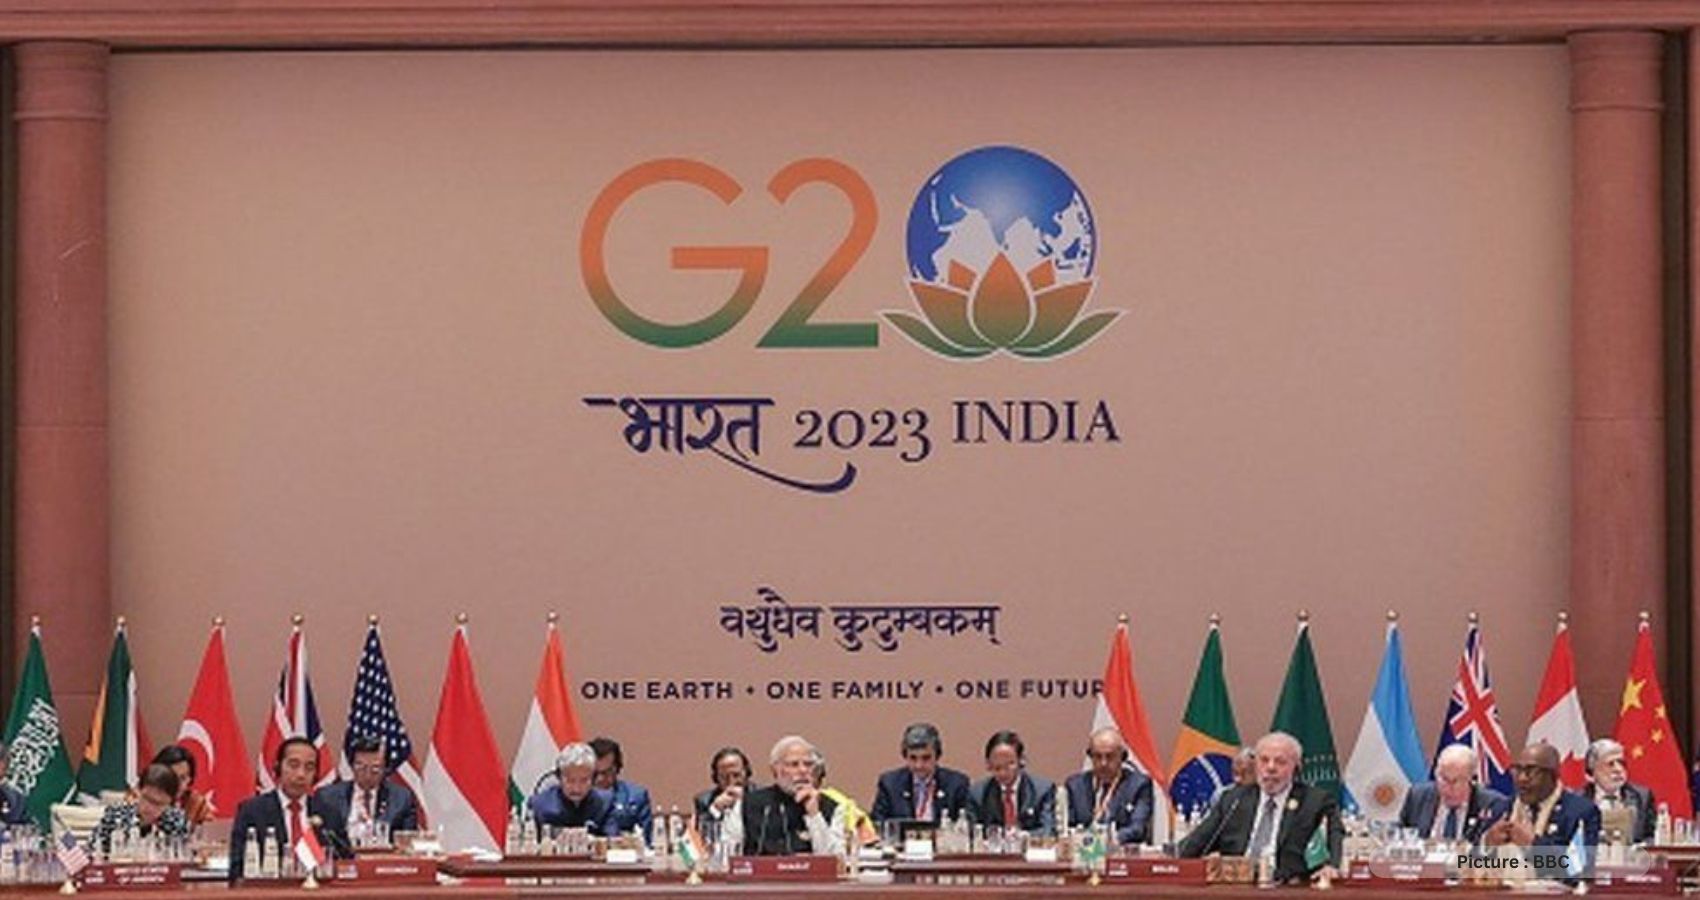 G20 In New Delhi, A Milestone For India, US Leadership